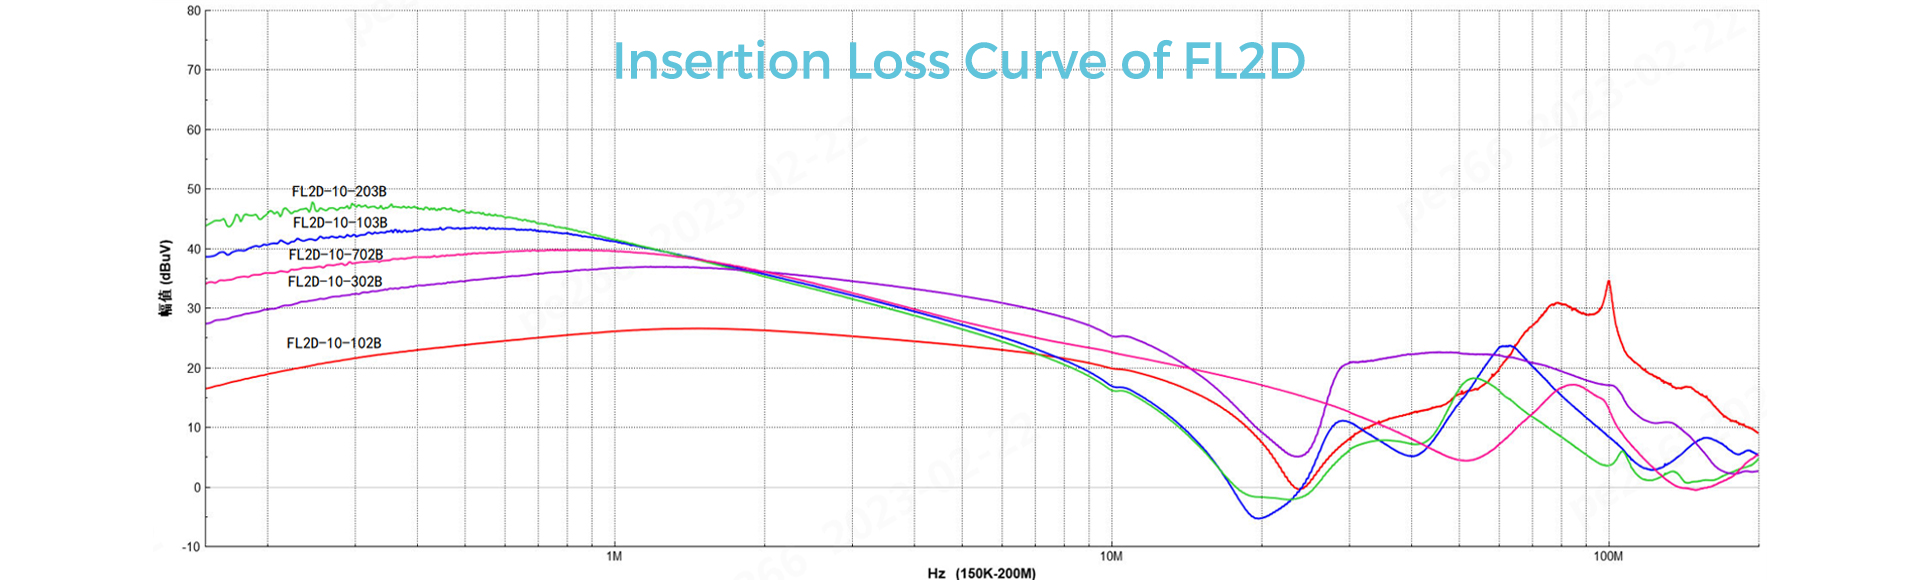 Insertion Loss Curve of FL2D.jpg